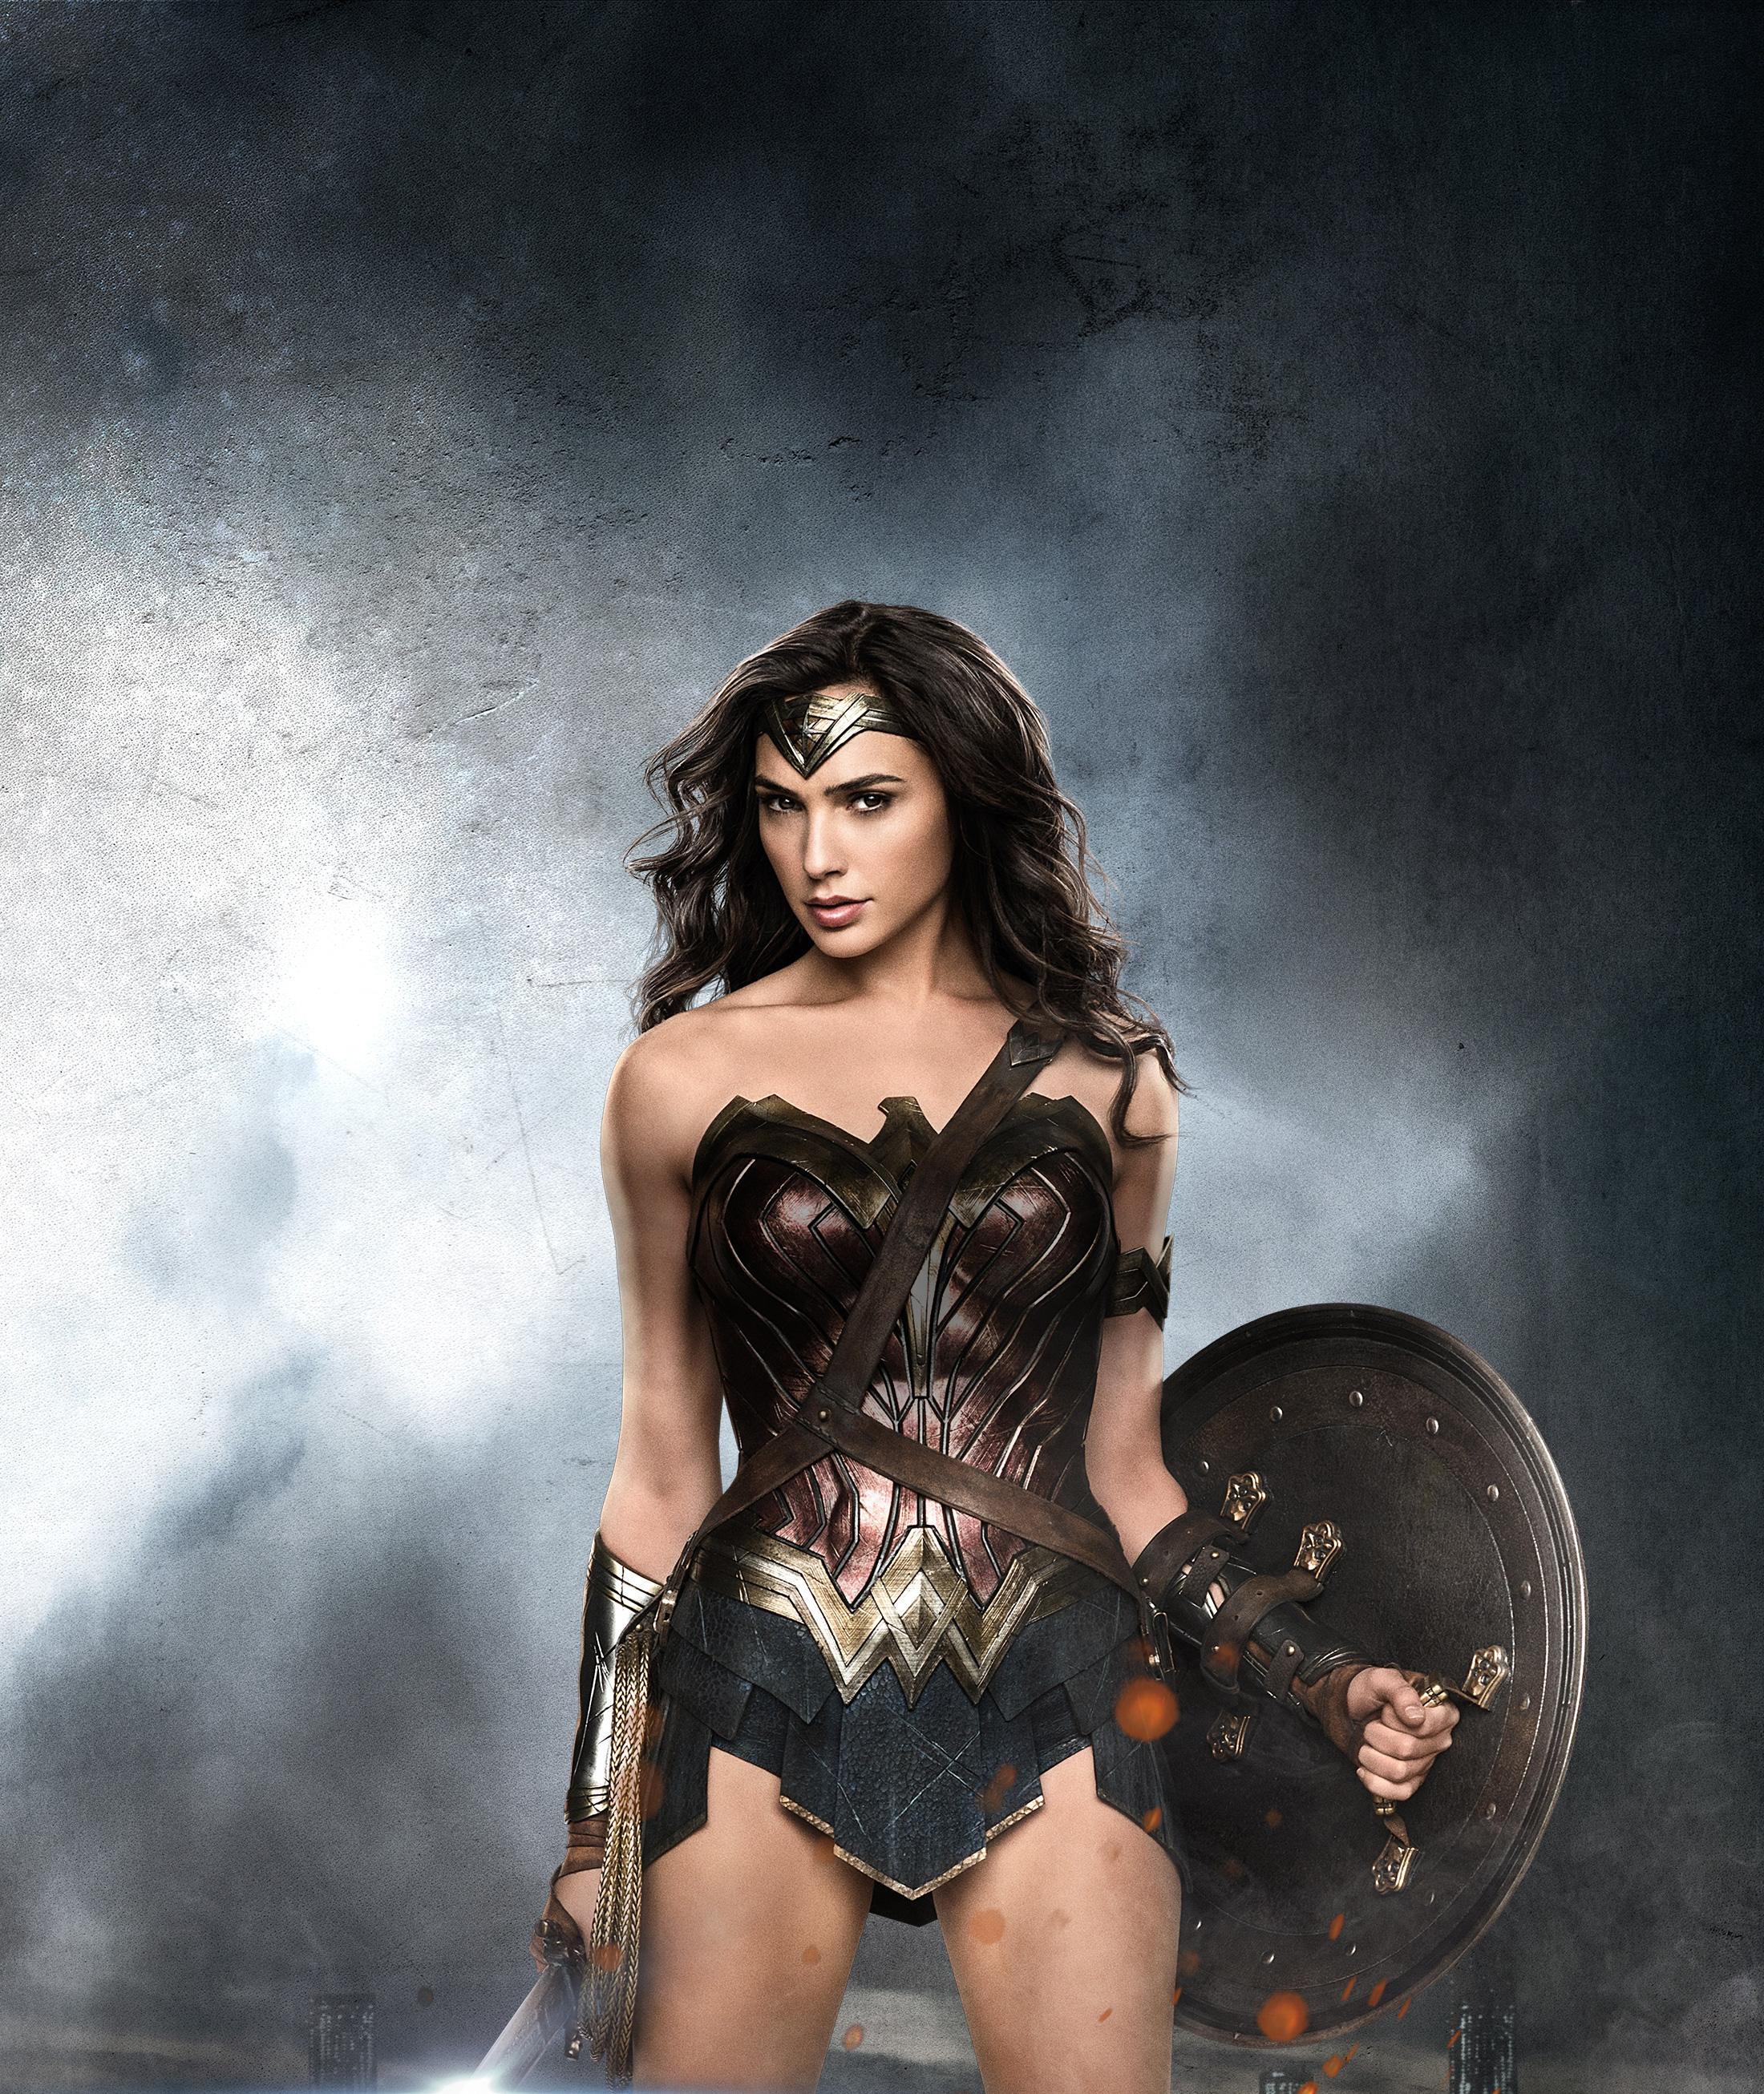 Wallpaper Wonder Woman, Gal Gadot, Batman v Superman, Movies